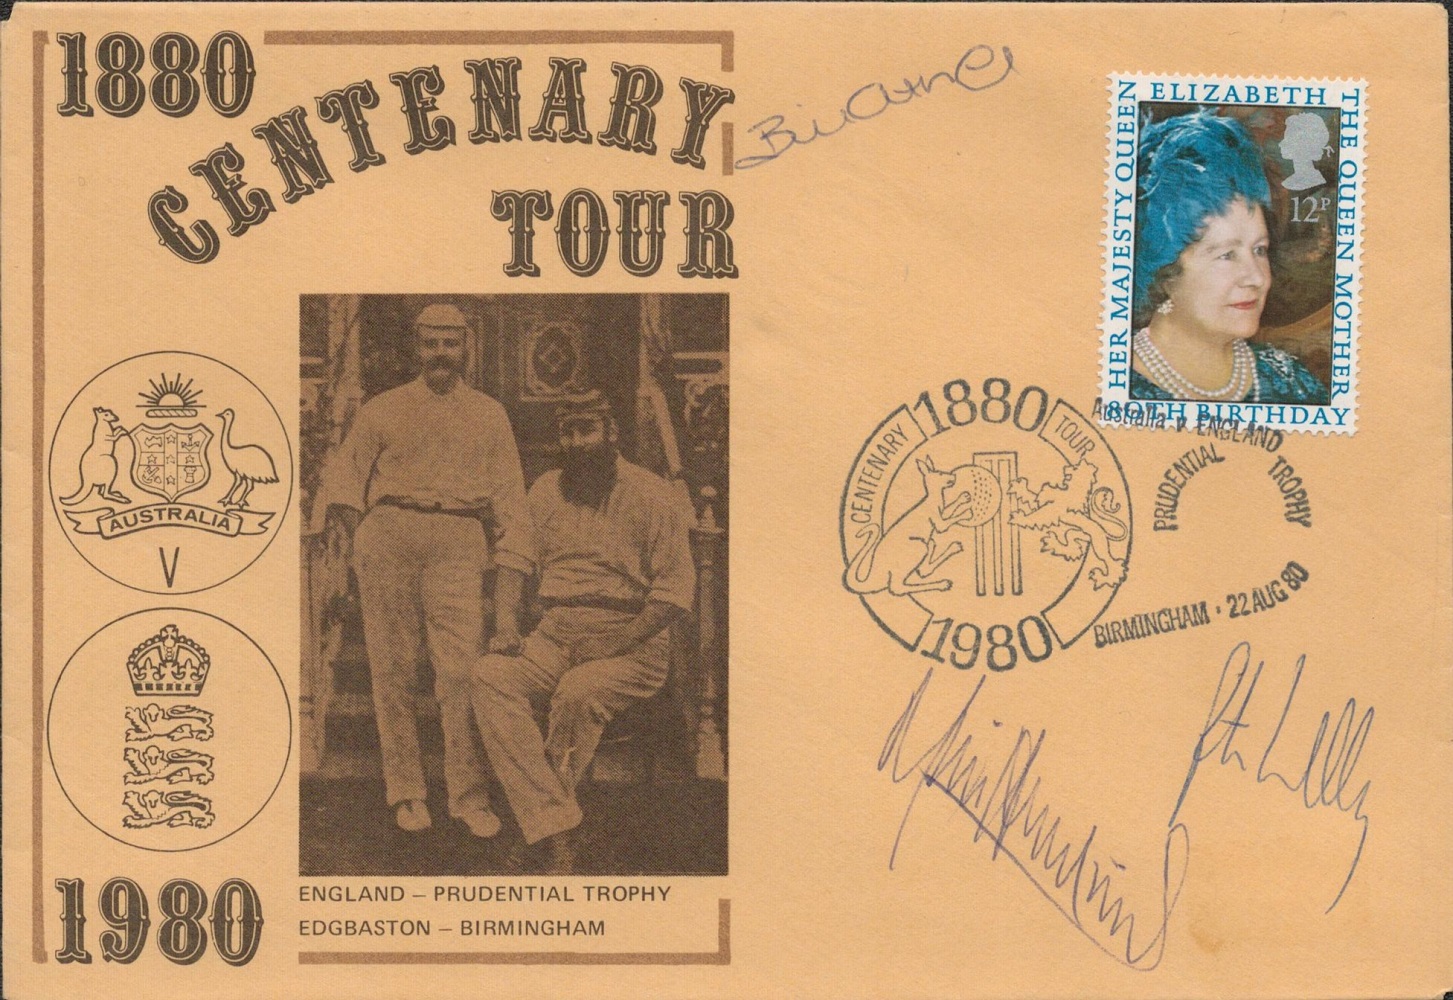 Cricket Surrey v Australia Centenary Tour 18801980 signed commemorative cover signed by Bill